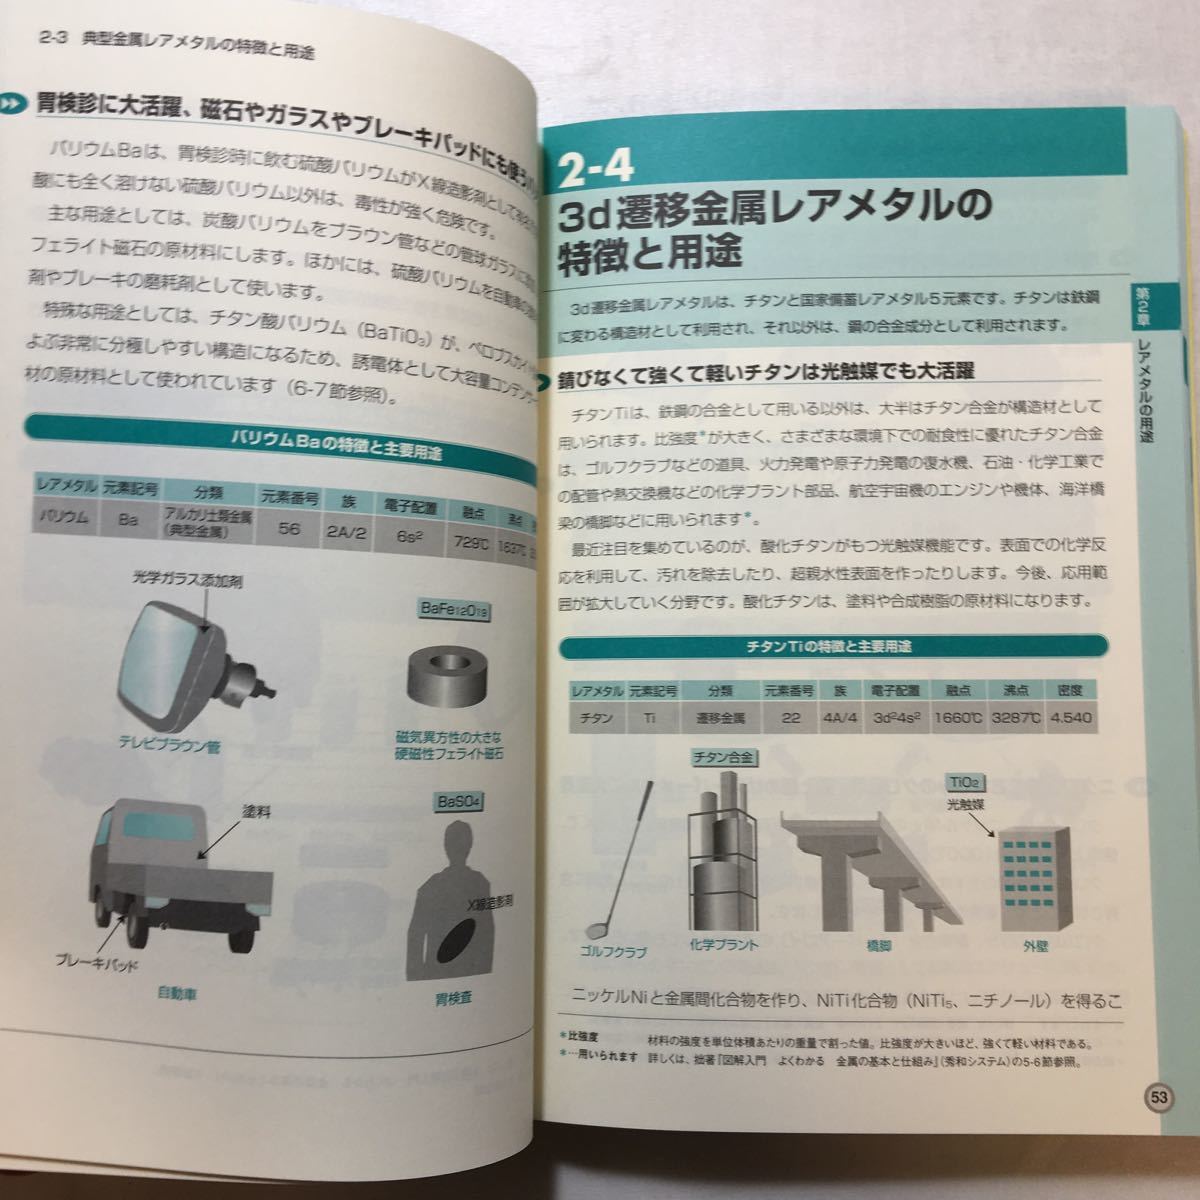 zaa-264♪図解入門よくわかる最新レアメタルの基本と仕組み (How‐nual Visual Guide Book) 単行本 2007/11/12 田中 和明 (著)